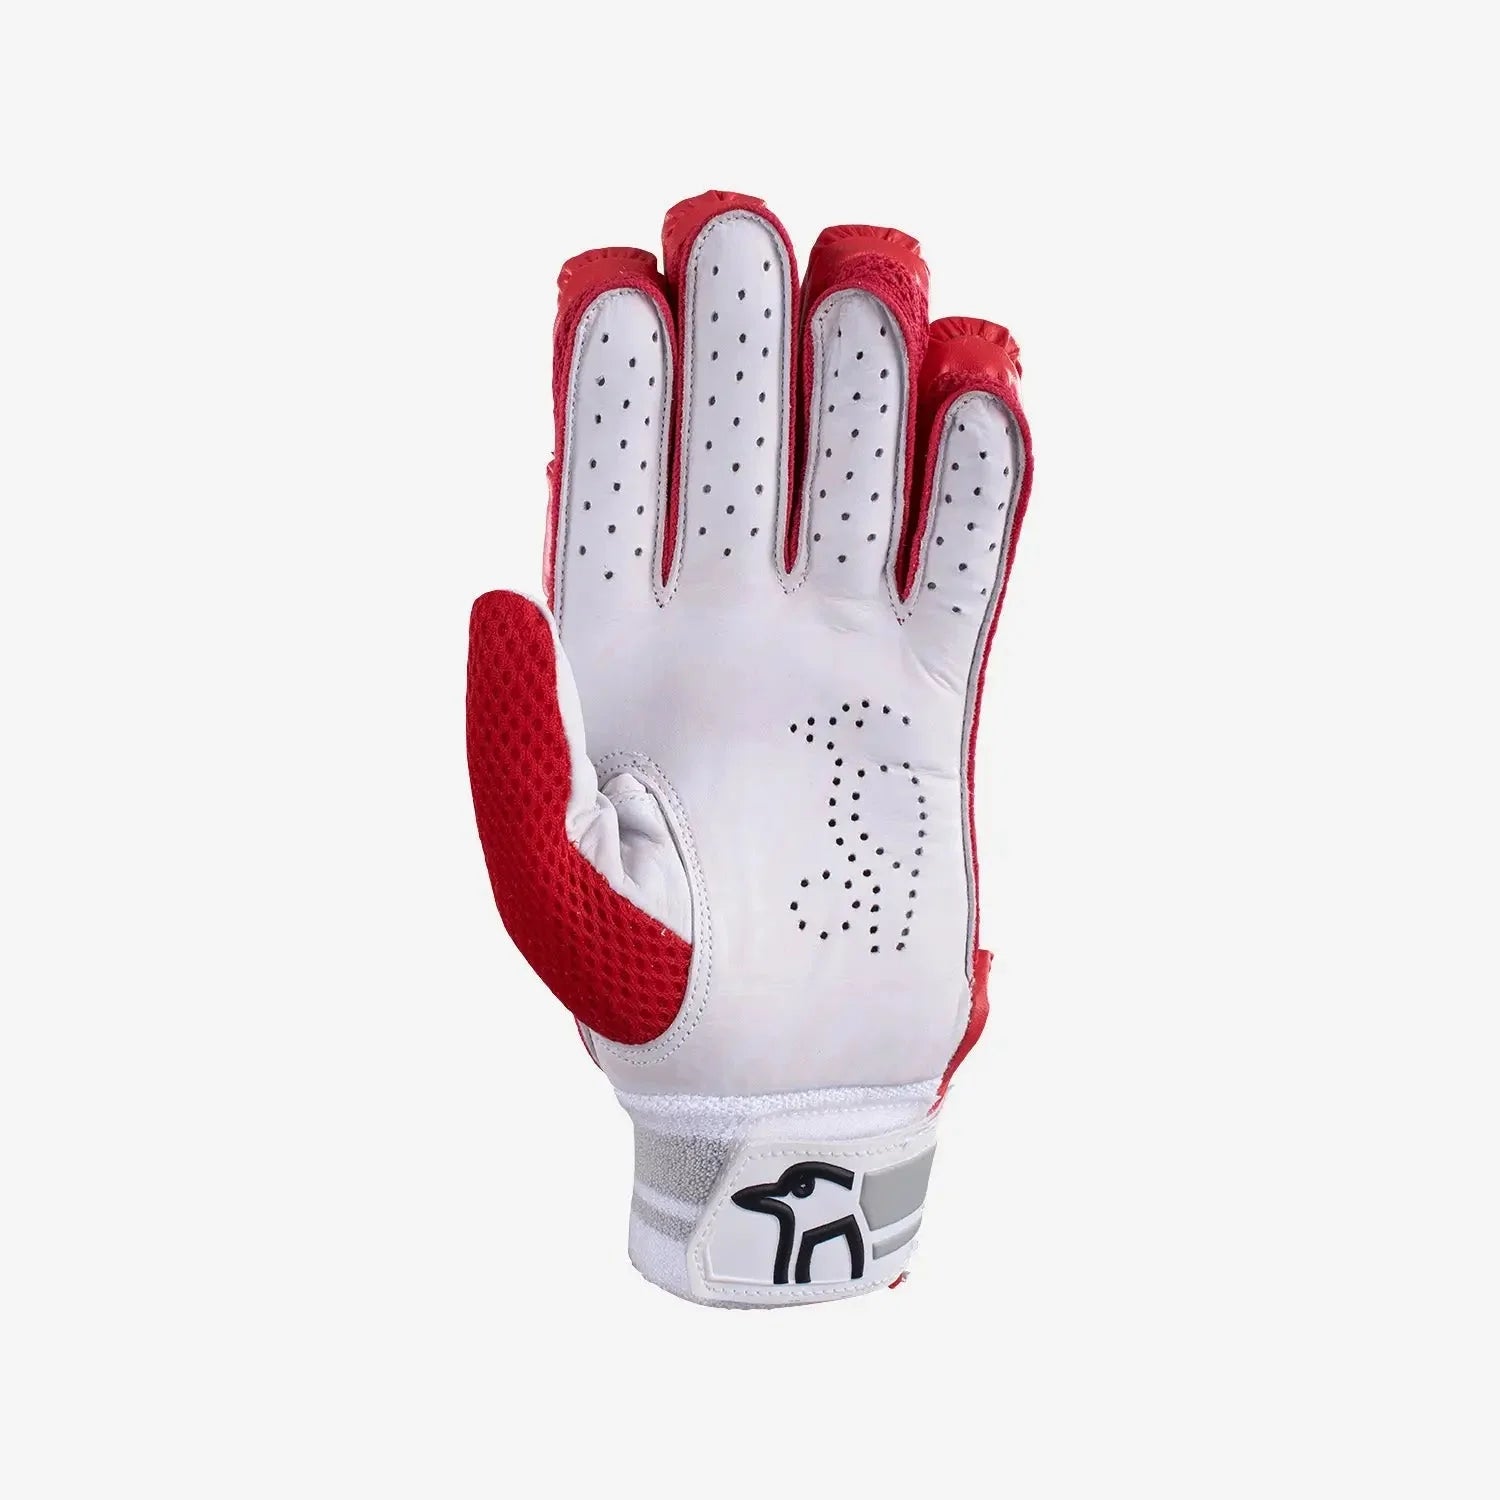 Kookaburra 4.1 T20 Red Cricket Batting Gloves - Cricket Best Buy